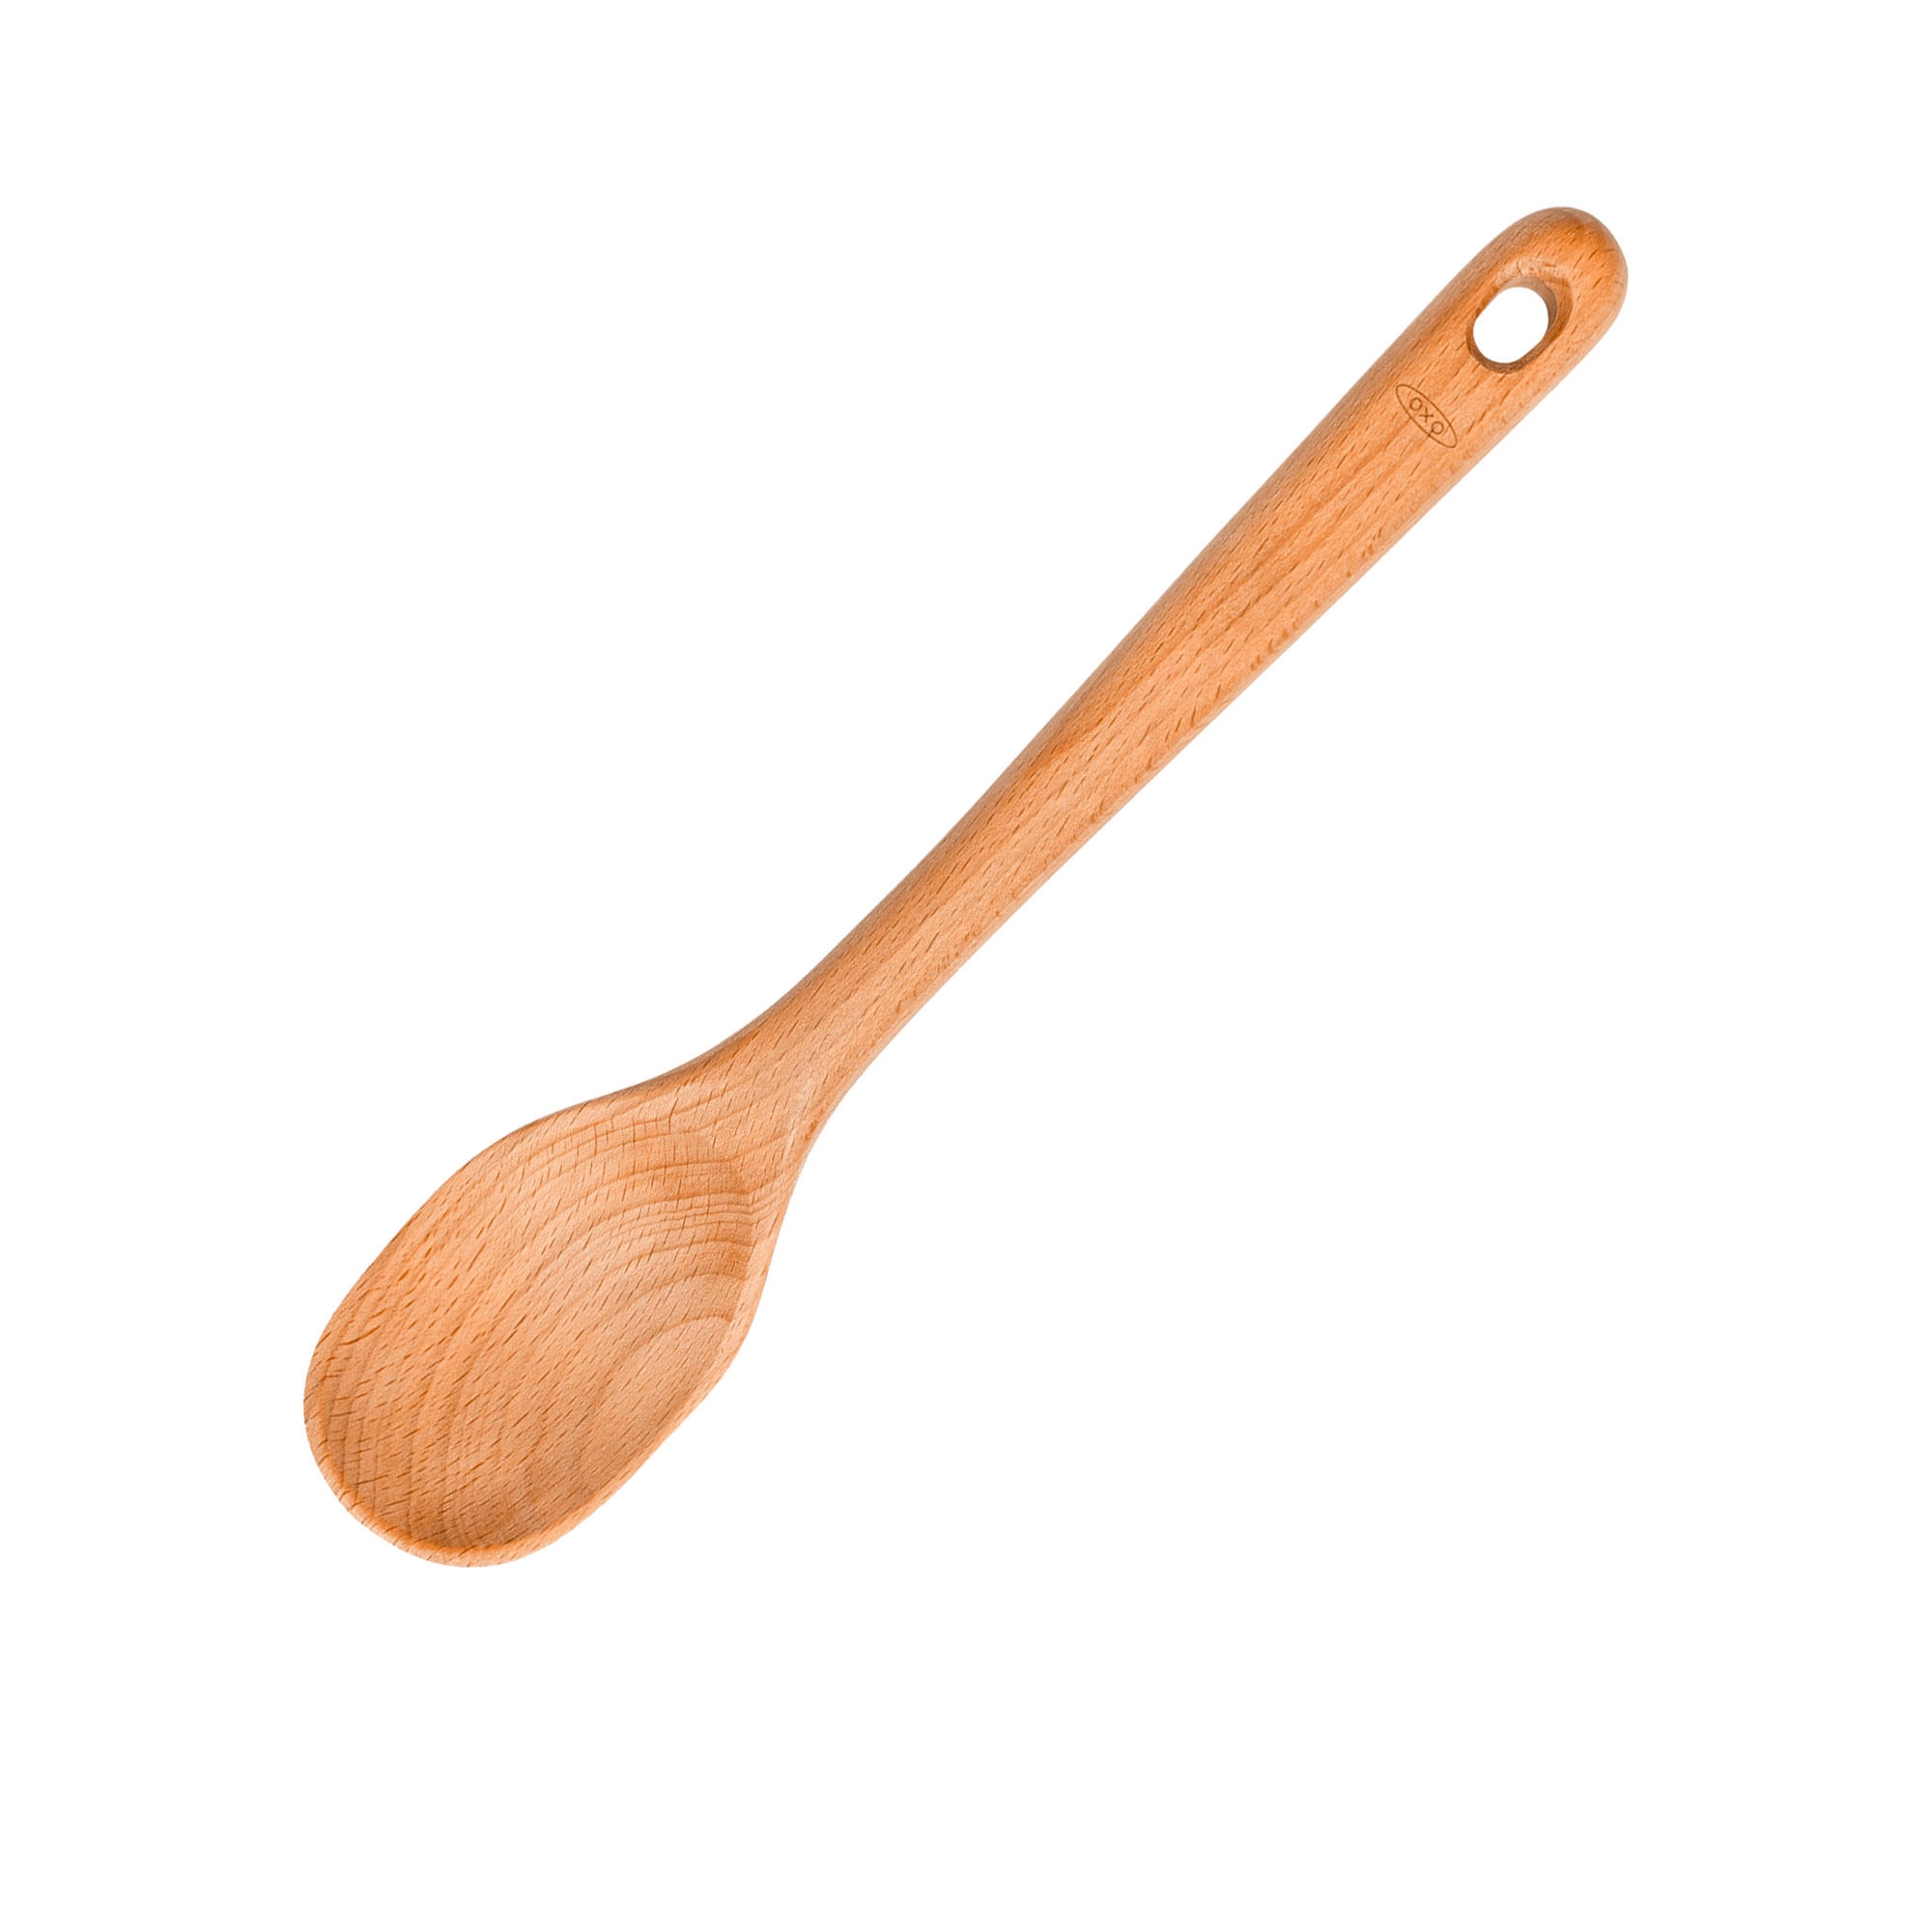 OXO Good Grips Wooden Spoon Medium Image 1